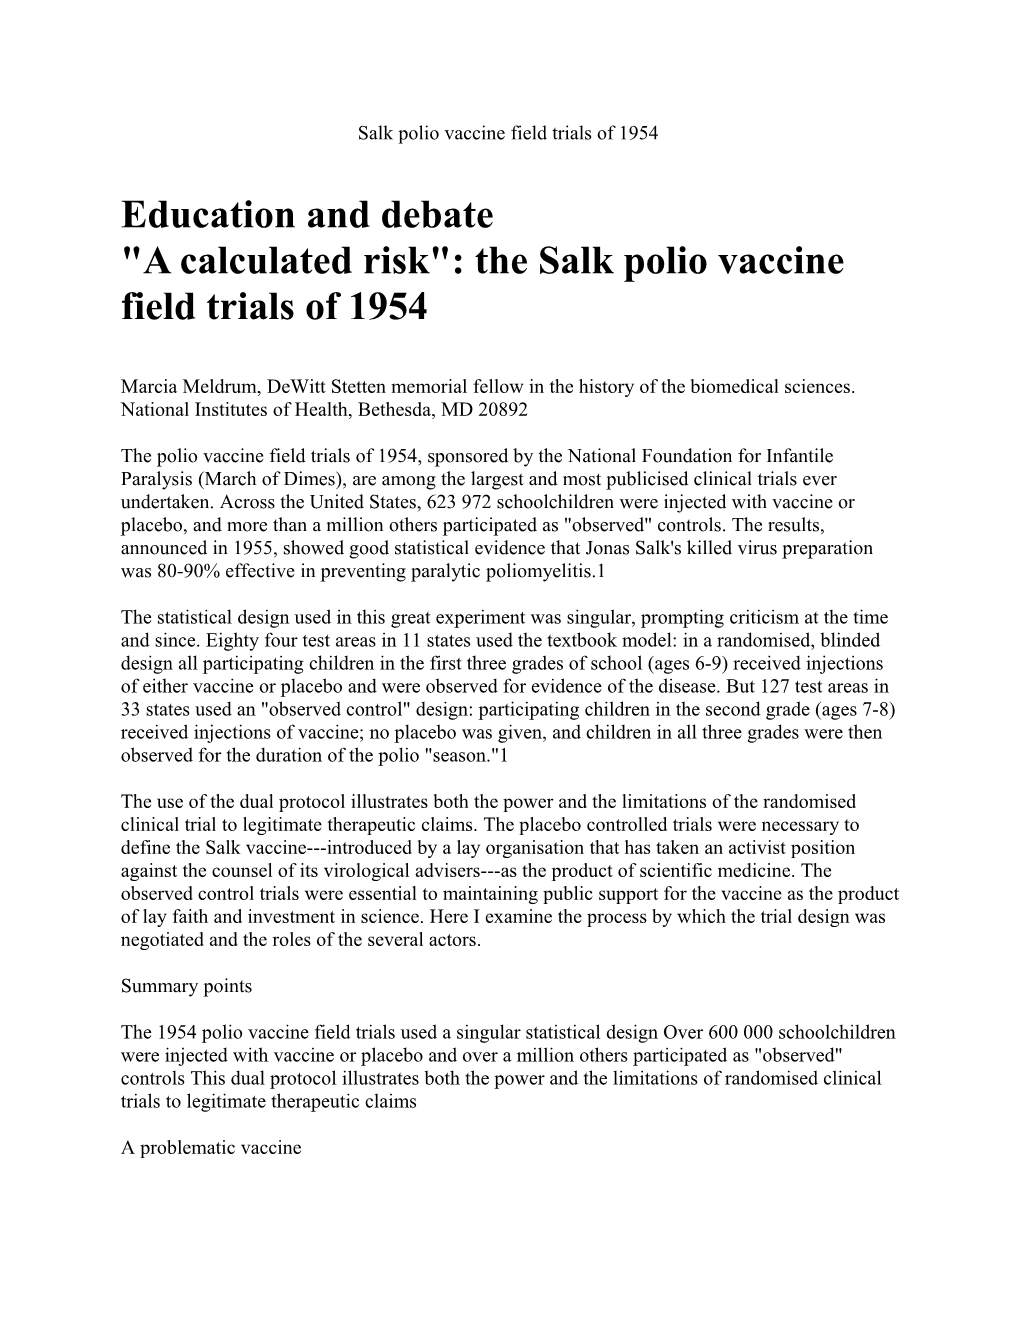 Salk Polio Vaccine Field Trials of 1954